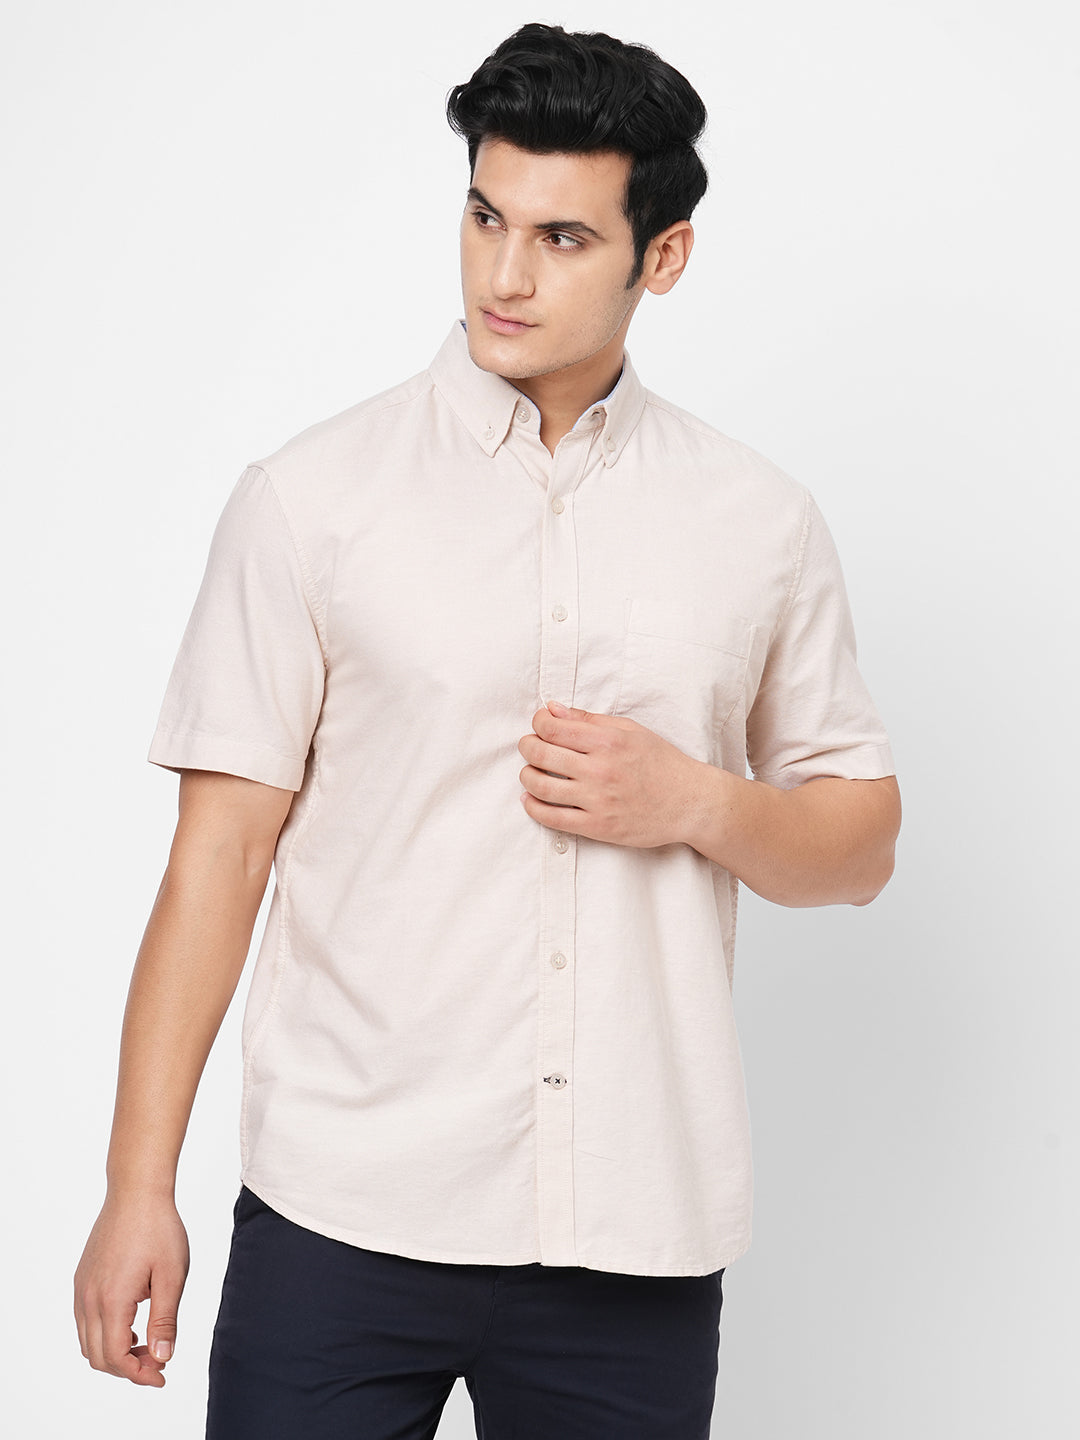 Men's Oxford Cotton Button down Collar Short Sleeved Shirt - Khaki